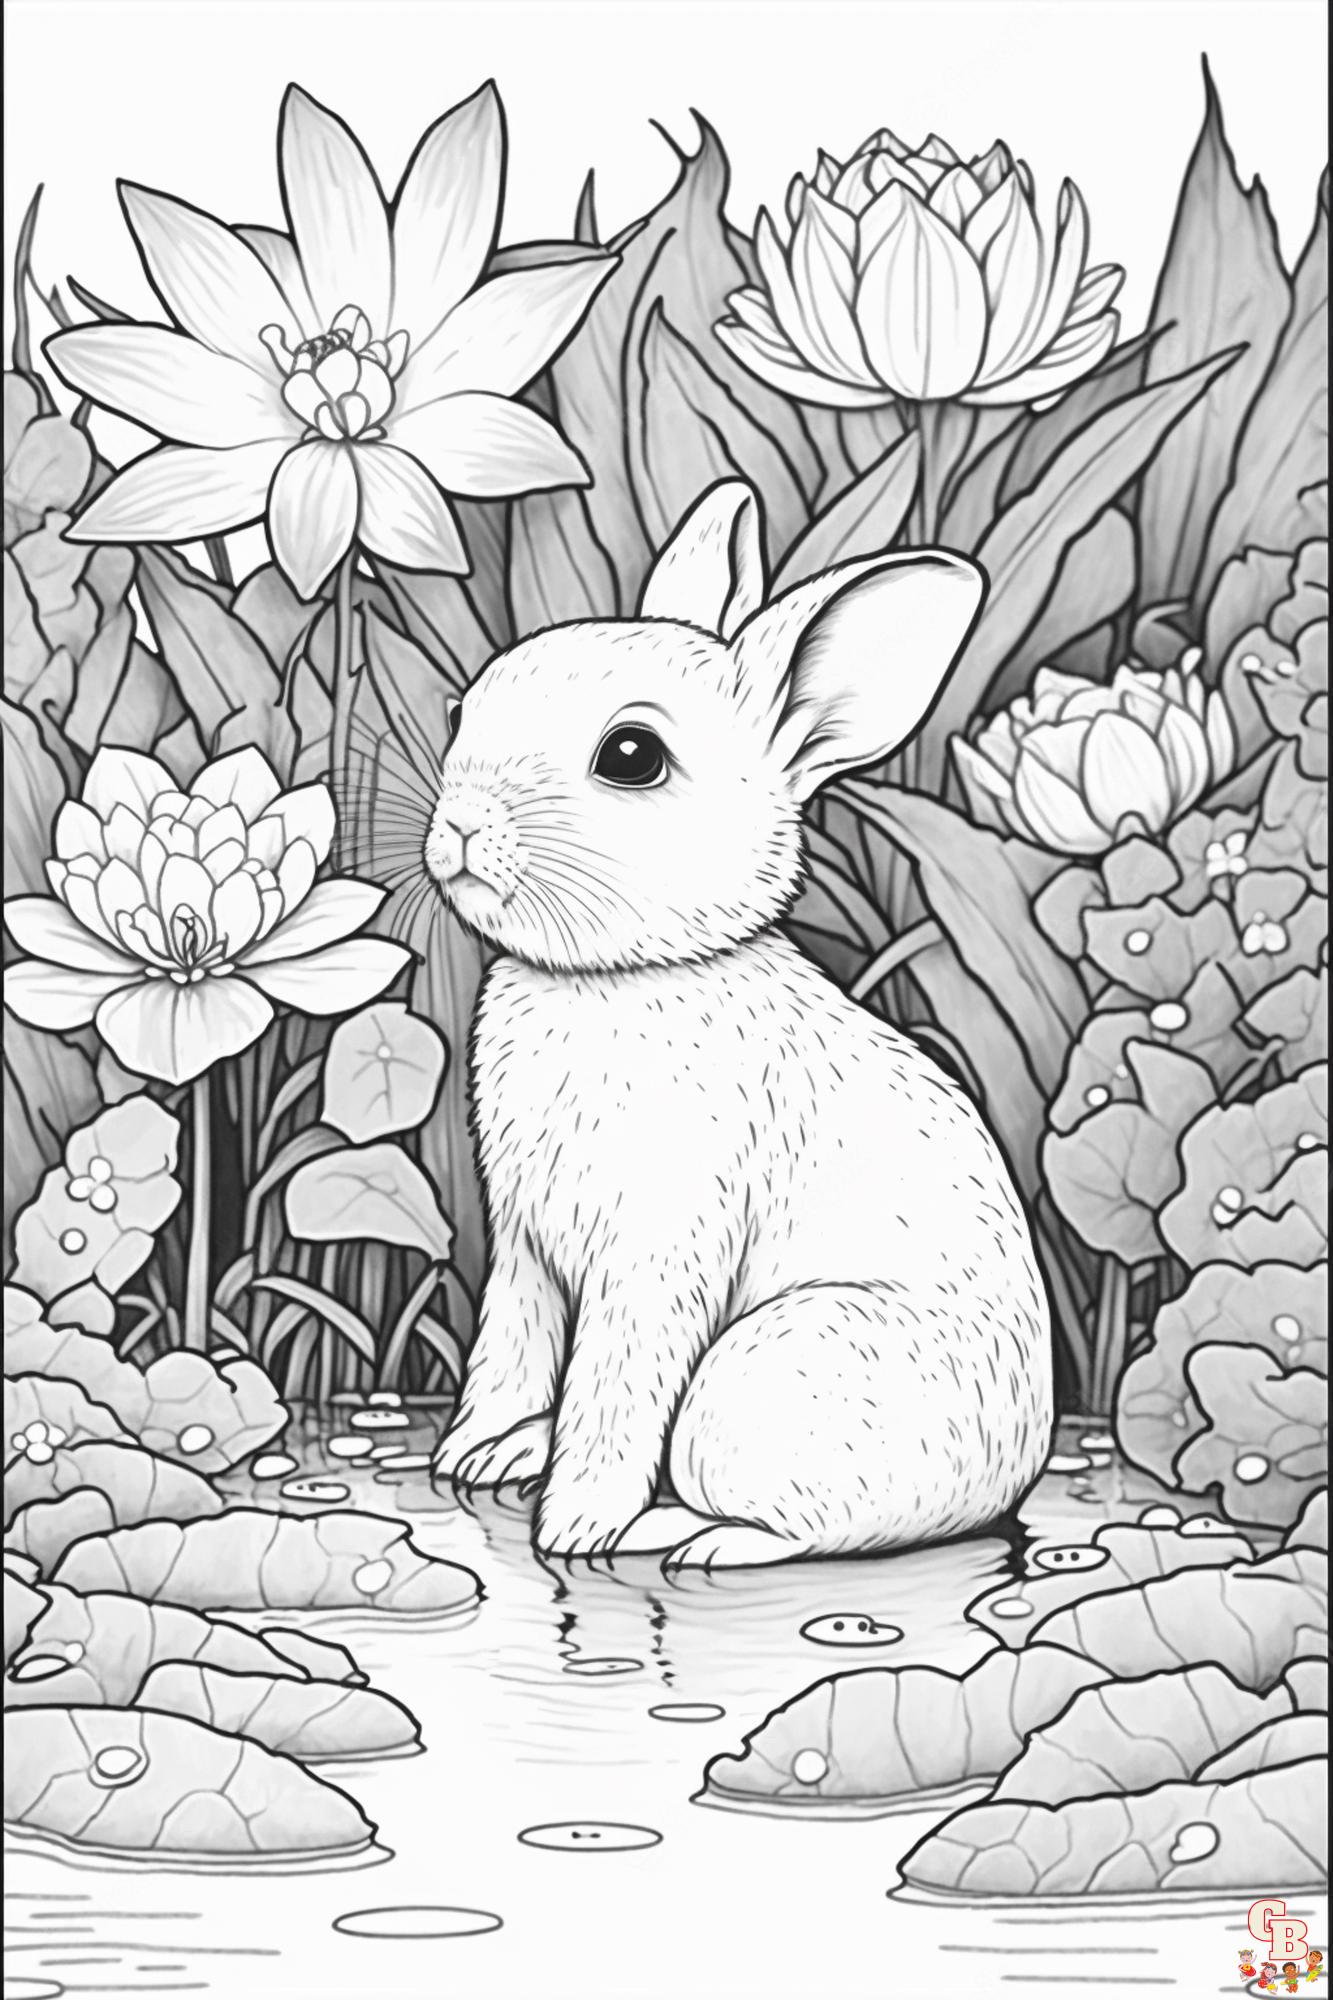 Dibujos animados de conejo para colorear, Pascua, realista, saltando, lindo, con flores